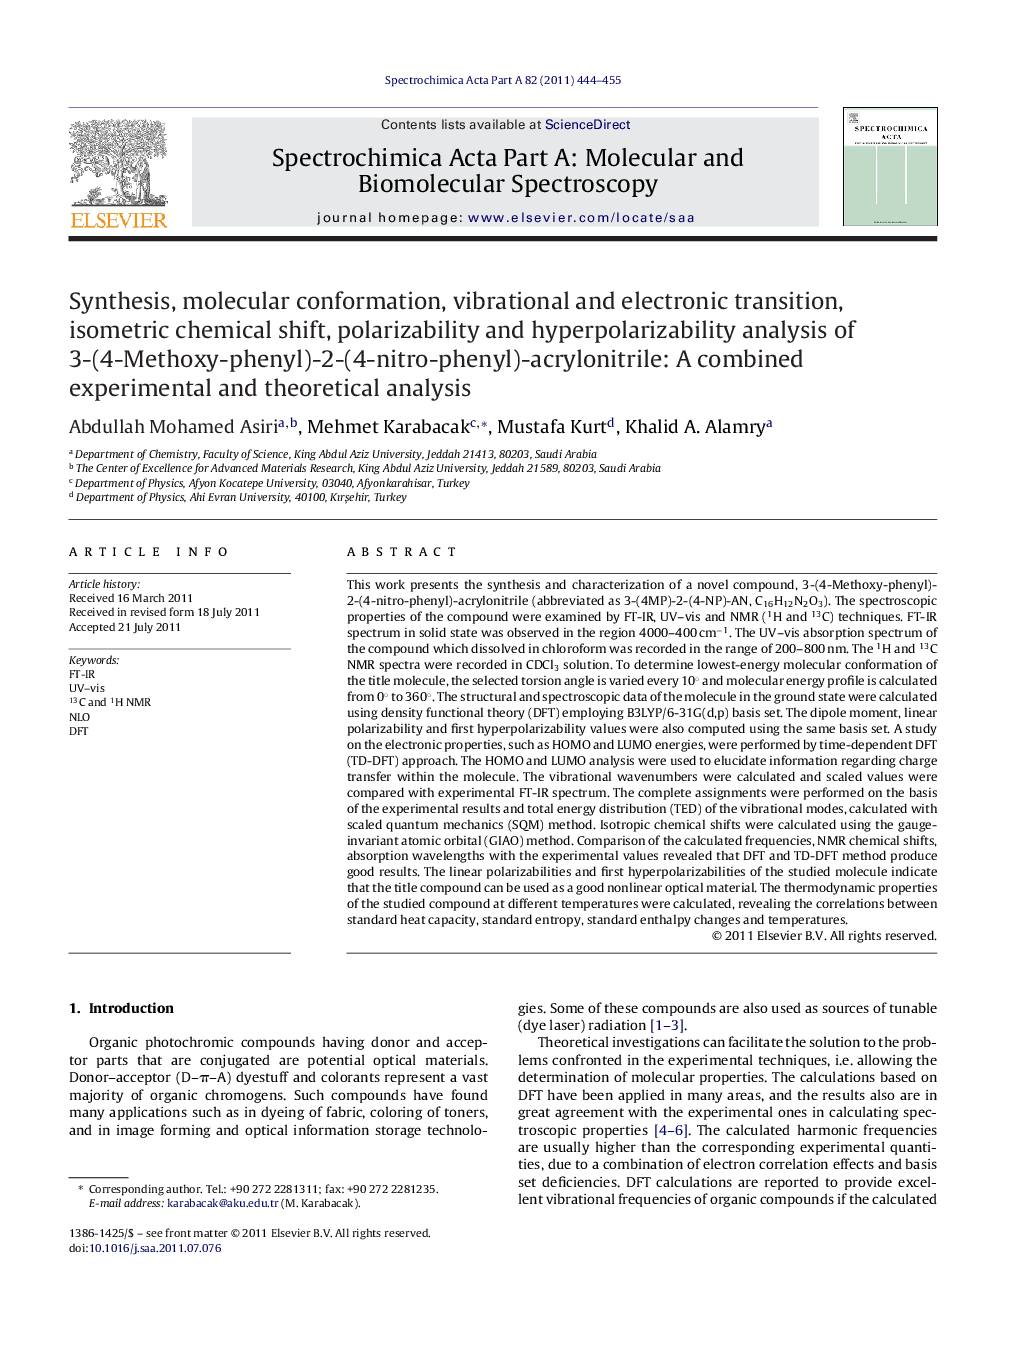 Synthesis, molecular conformation, vibrational and electronic transition, isometric chemical shift, polarizability and hyperpolarizability analysis of 3-(4-Methoxy-phenyl)-2-(4-nitro-phenyl)-acrylonitrile: A combined experimental and theoretical analysis